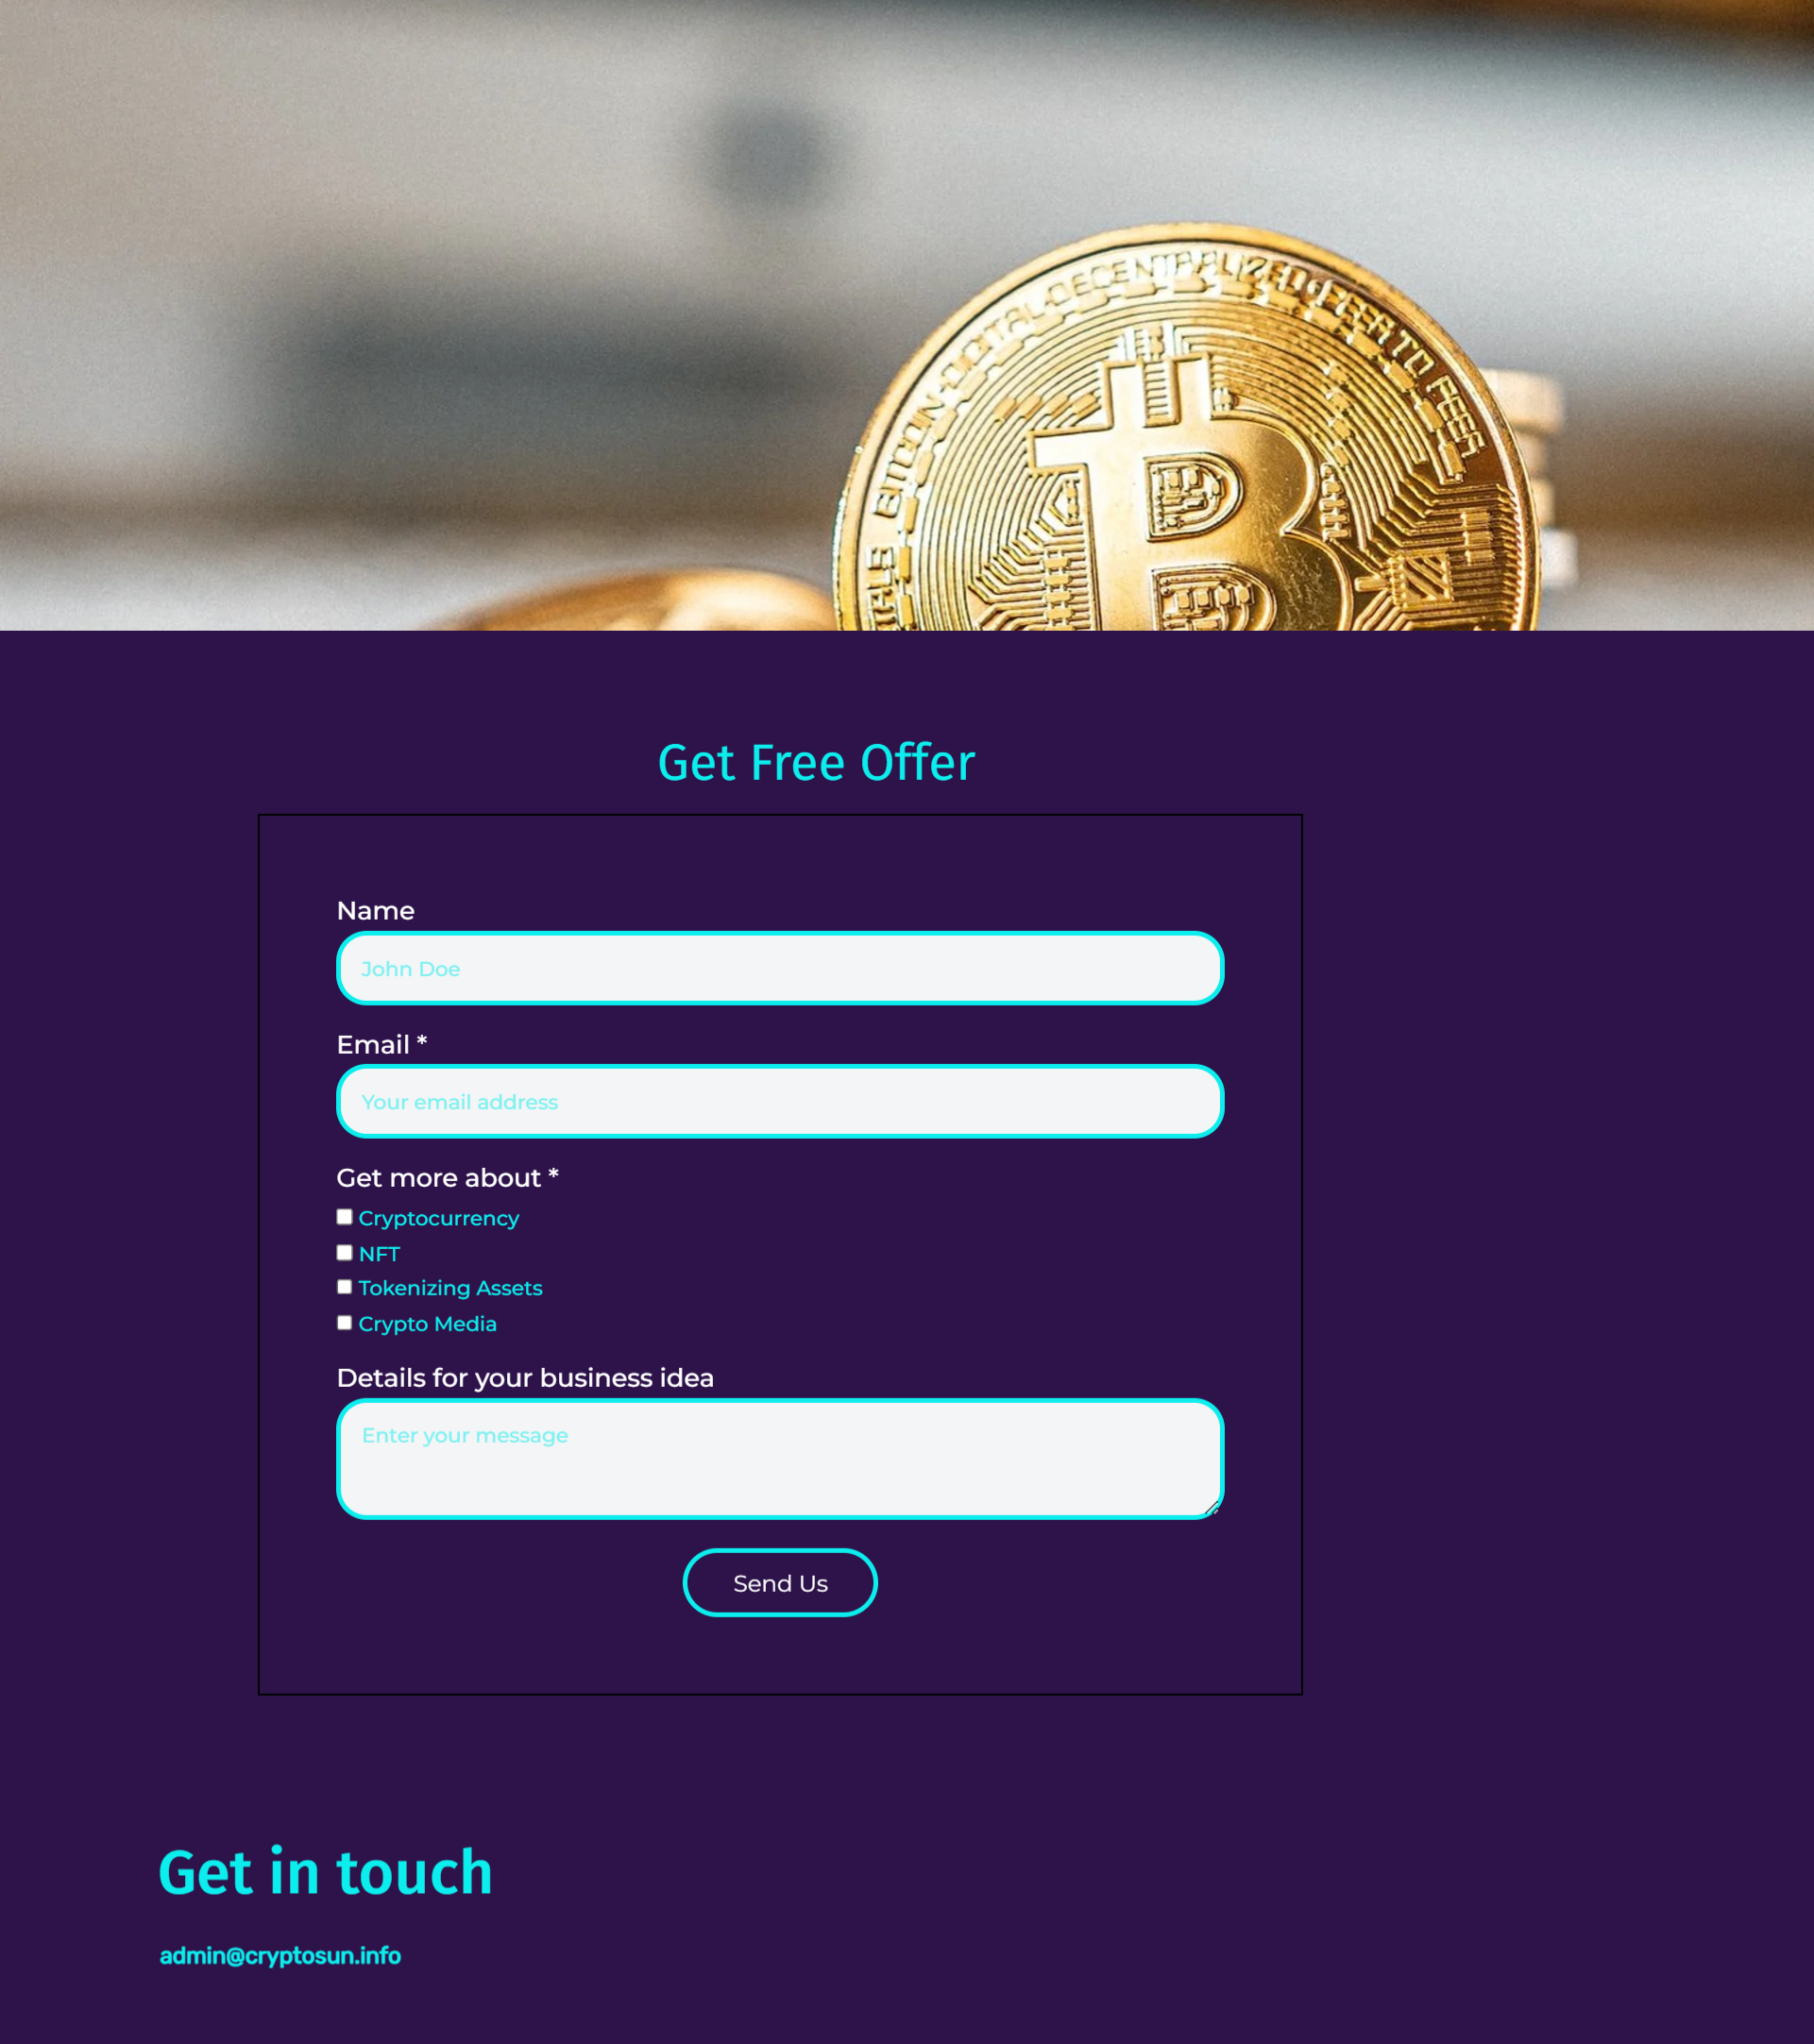 Modul for offer on the website CryptoSun